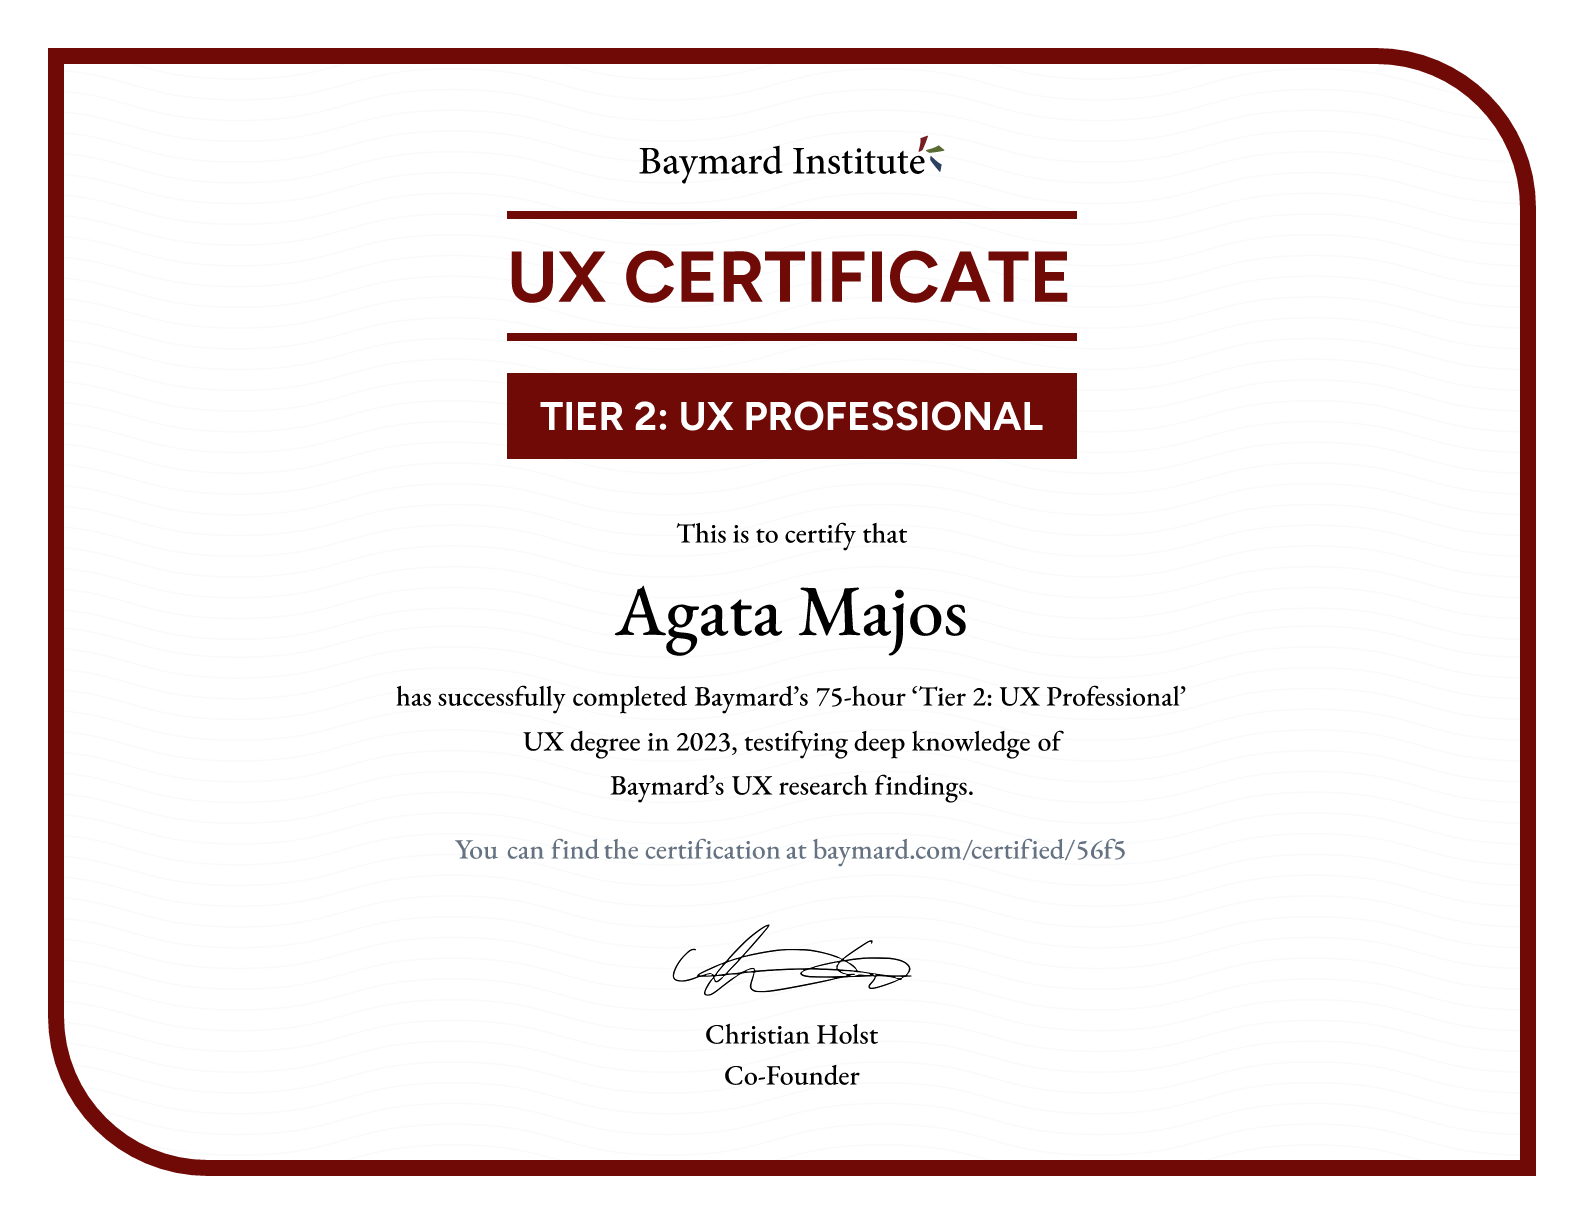 Agata Majos’s certificate